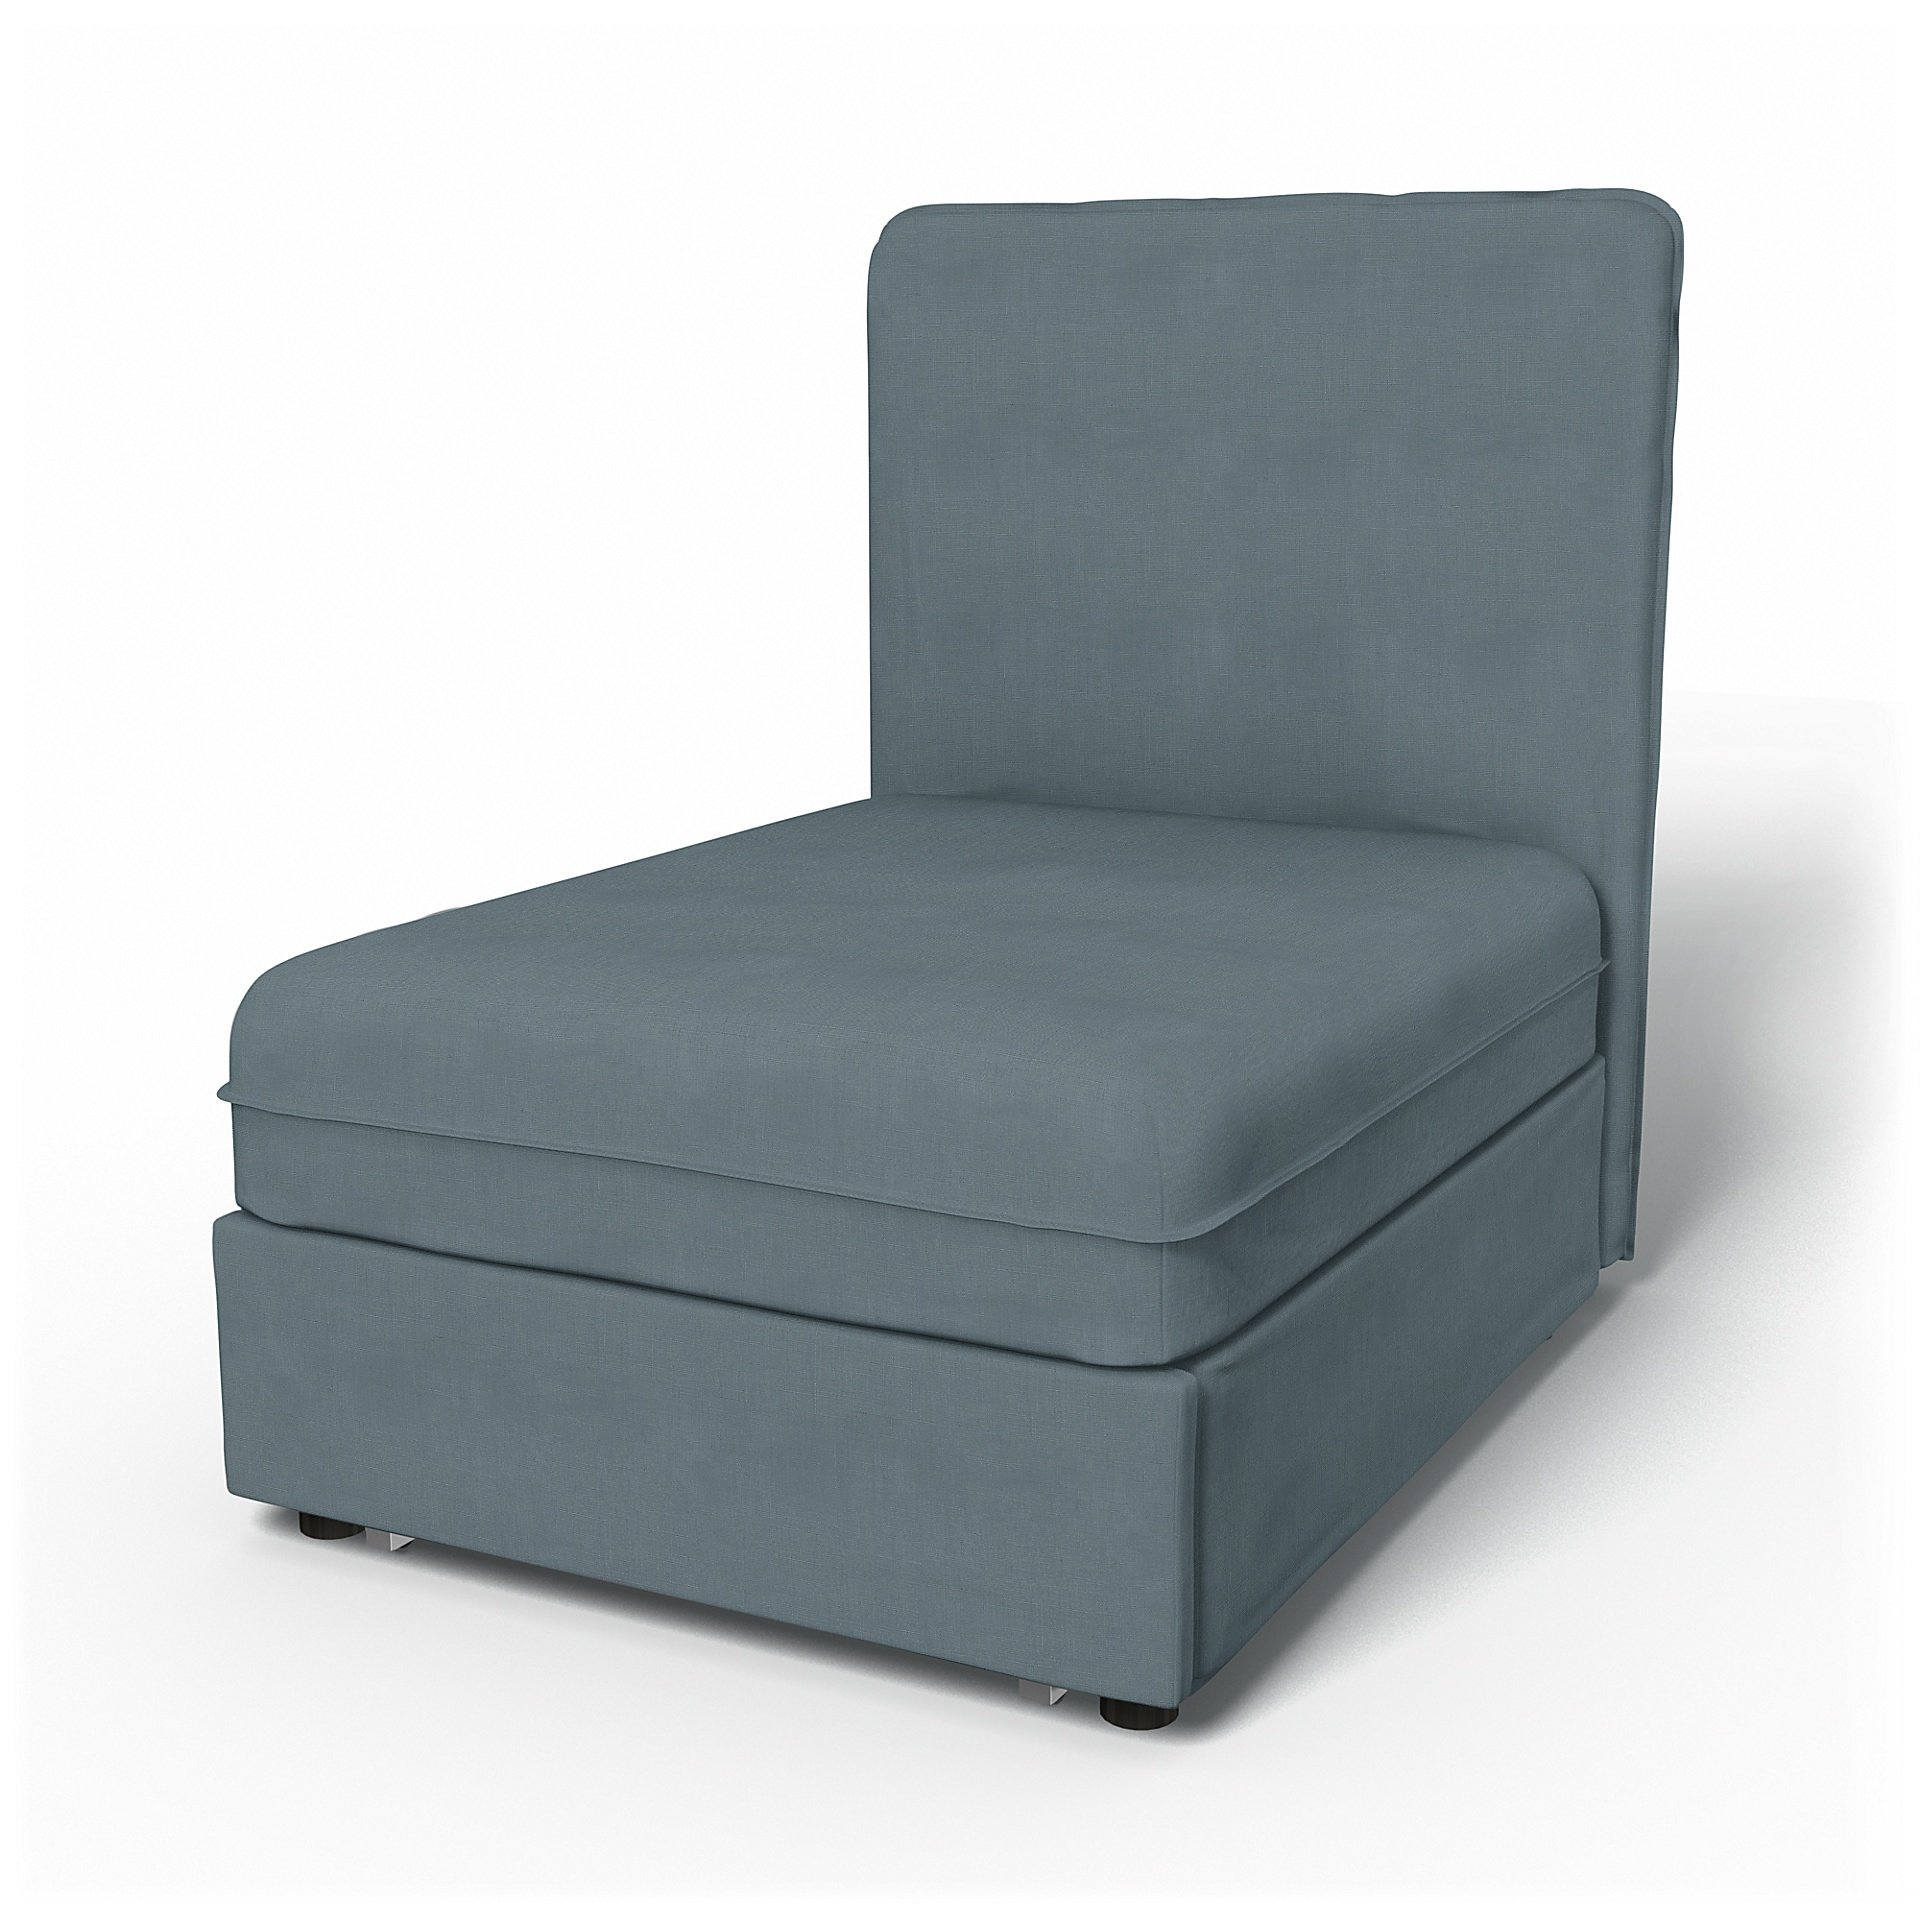 IKEA - Vallentuna Seat Module with High Back Sofa Bed Cover (80x100x46cm), Dusk, Linen - Bemz